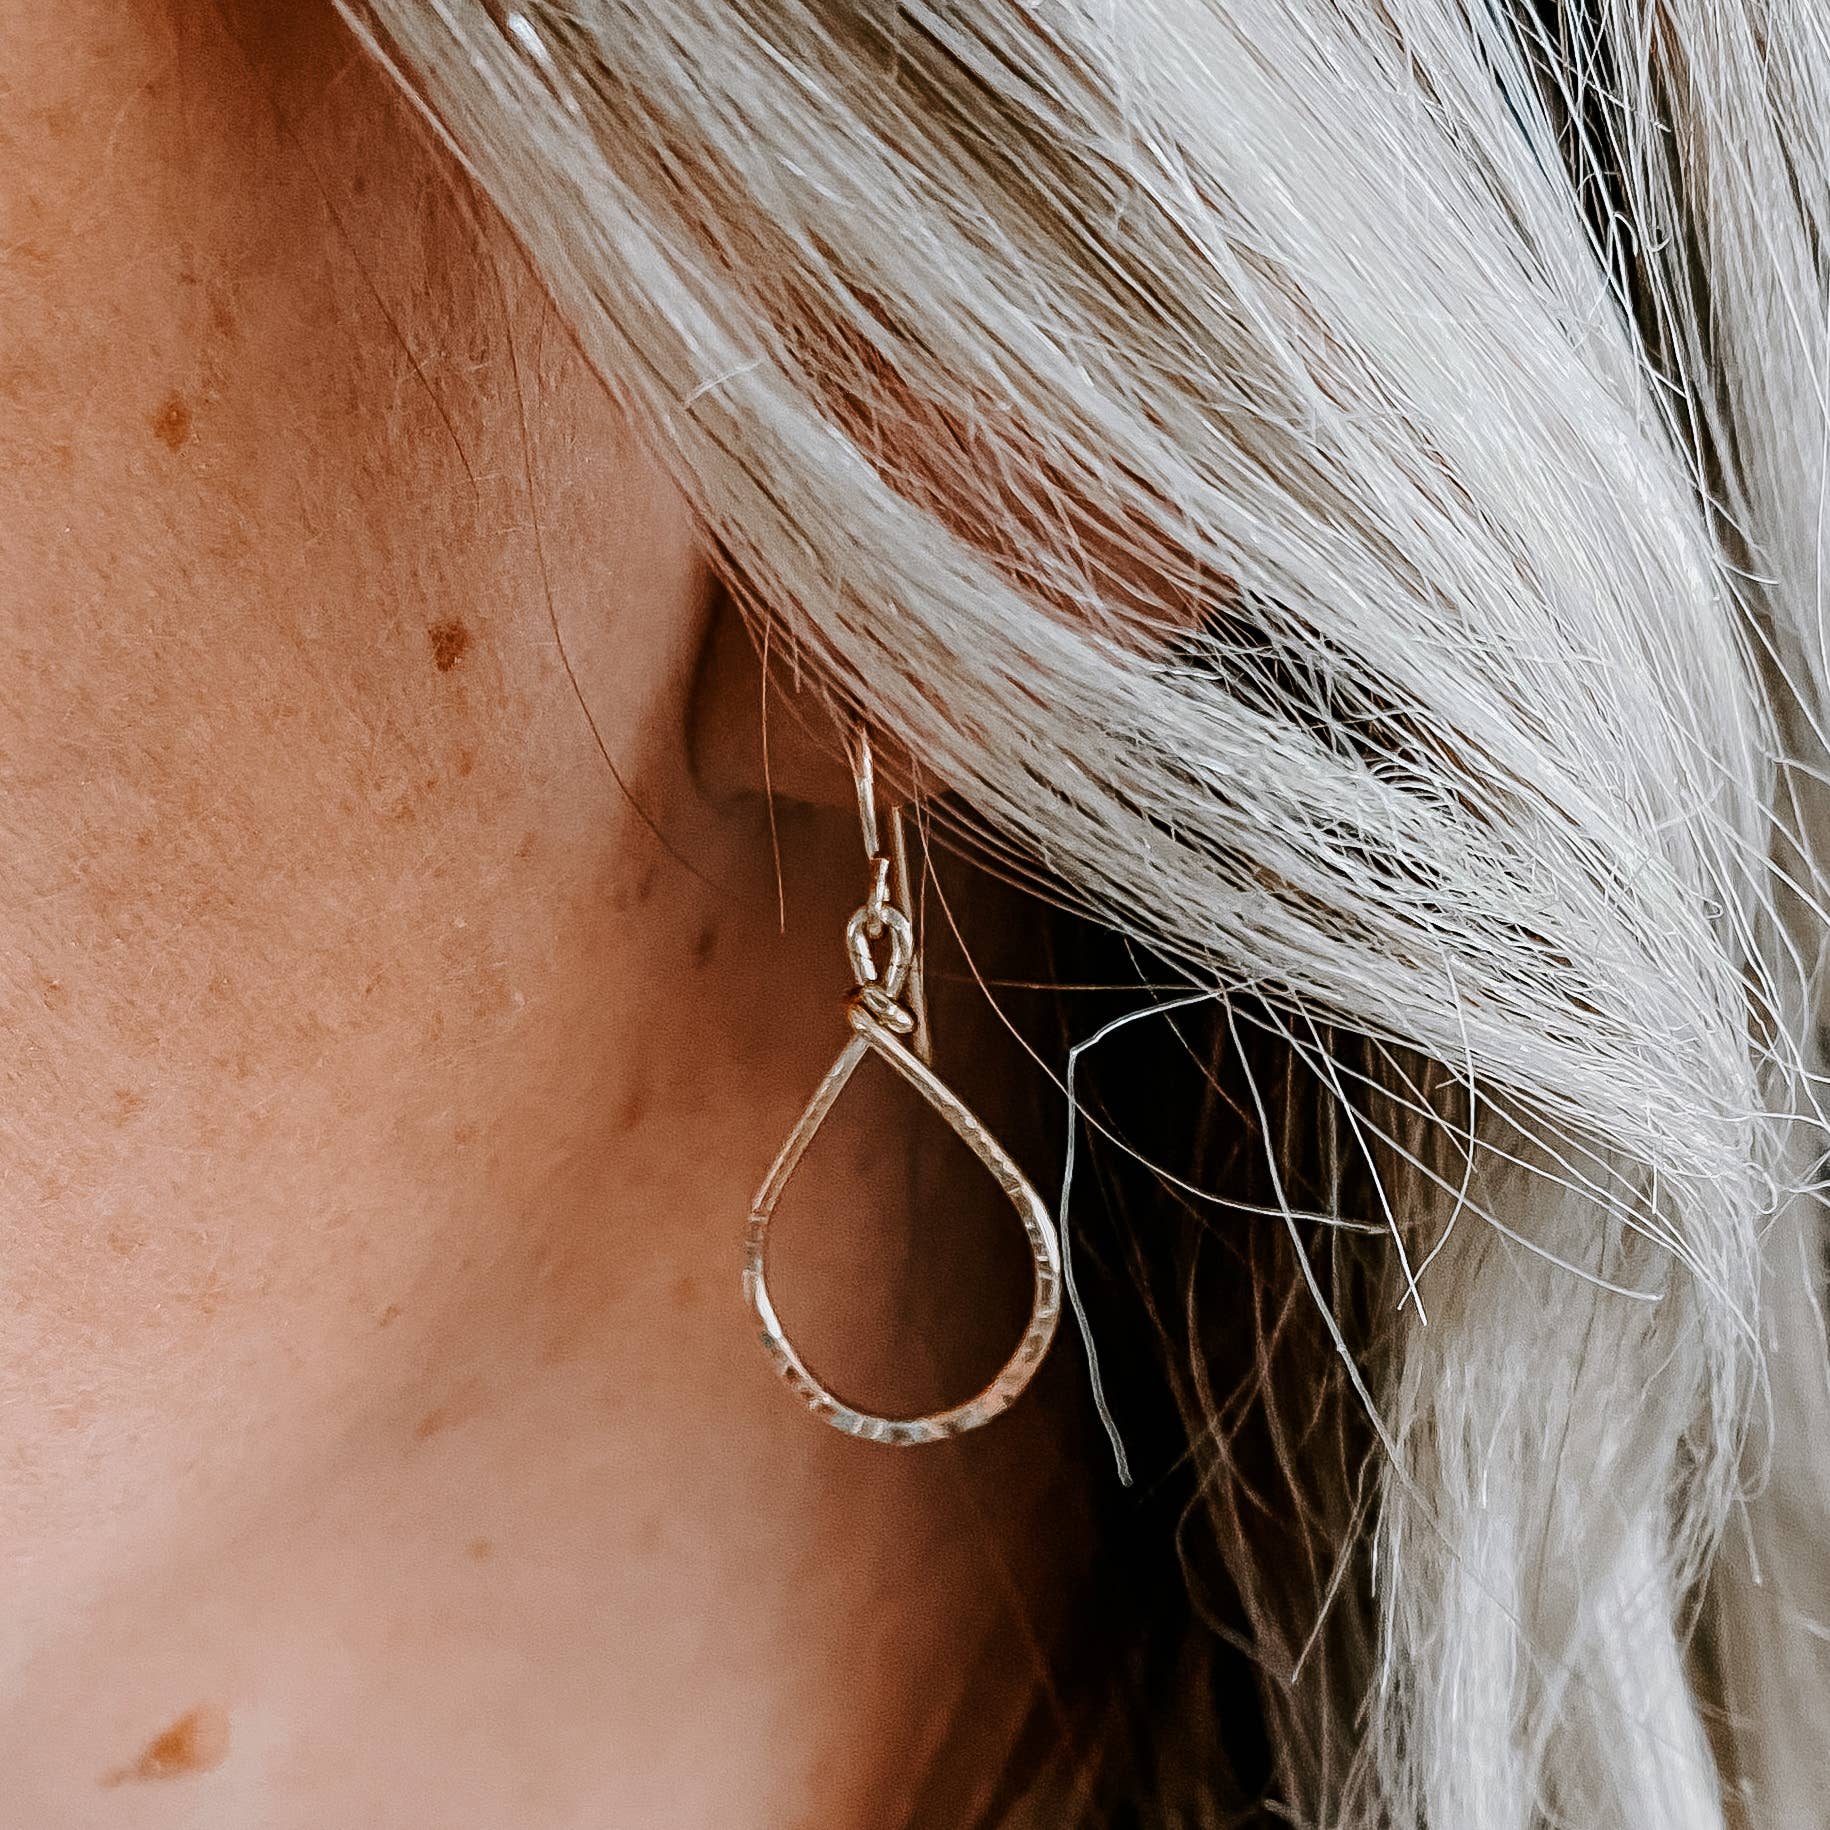 teardrop earrings with texture